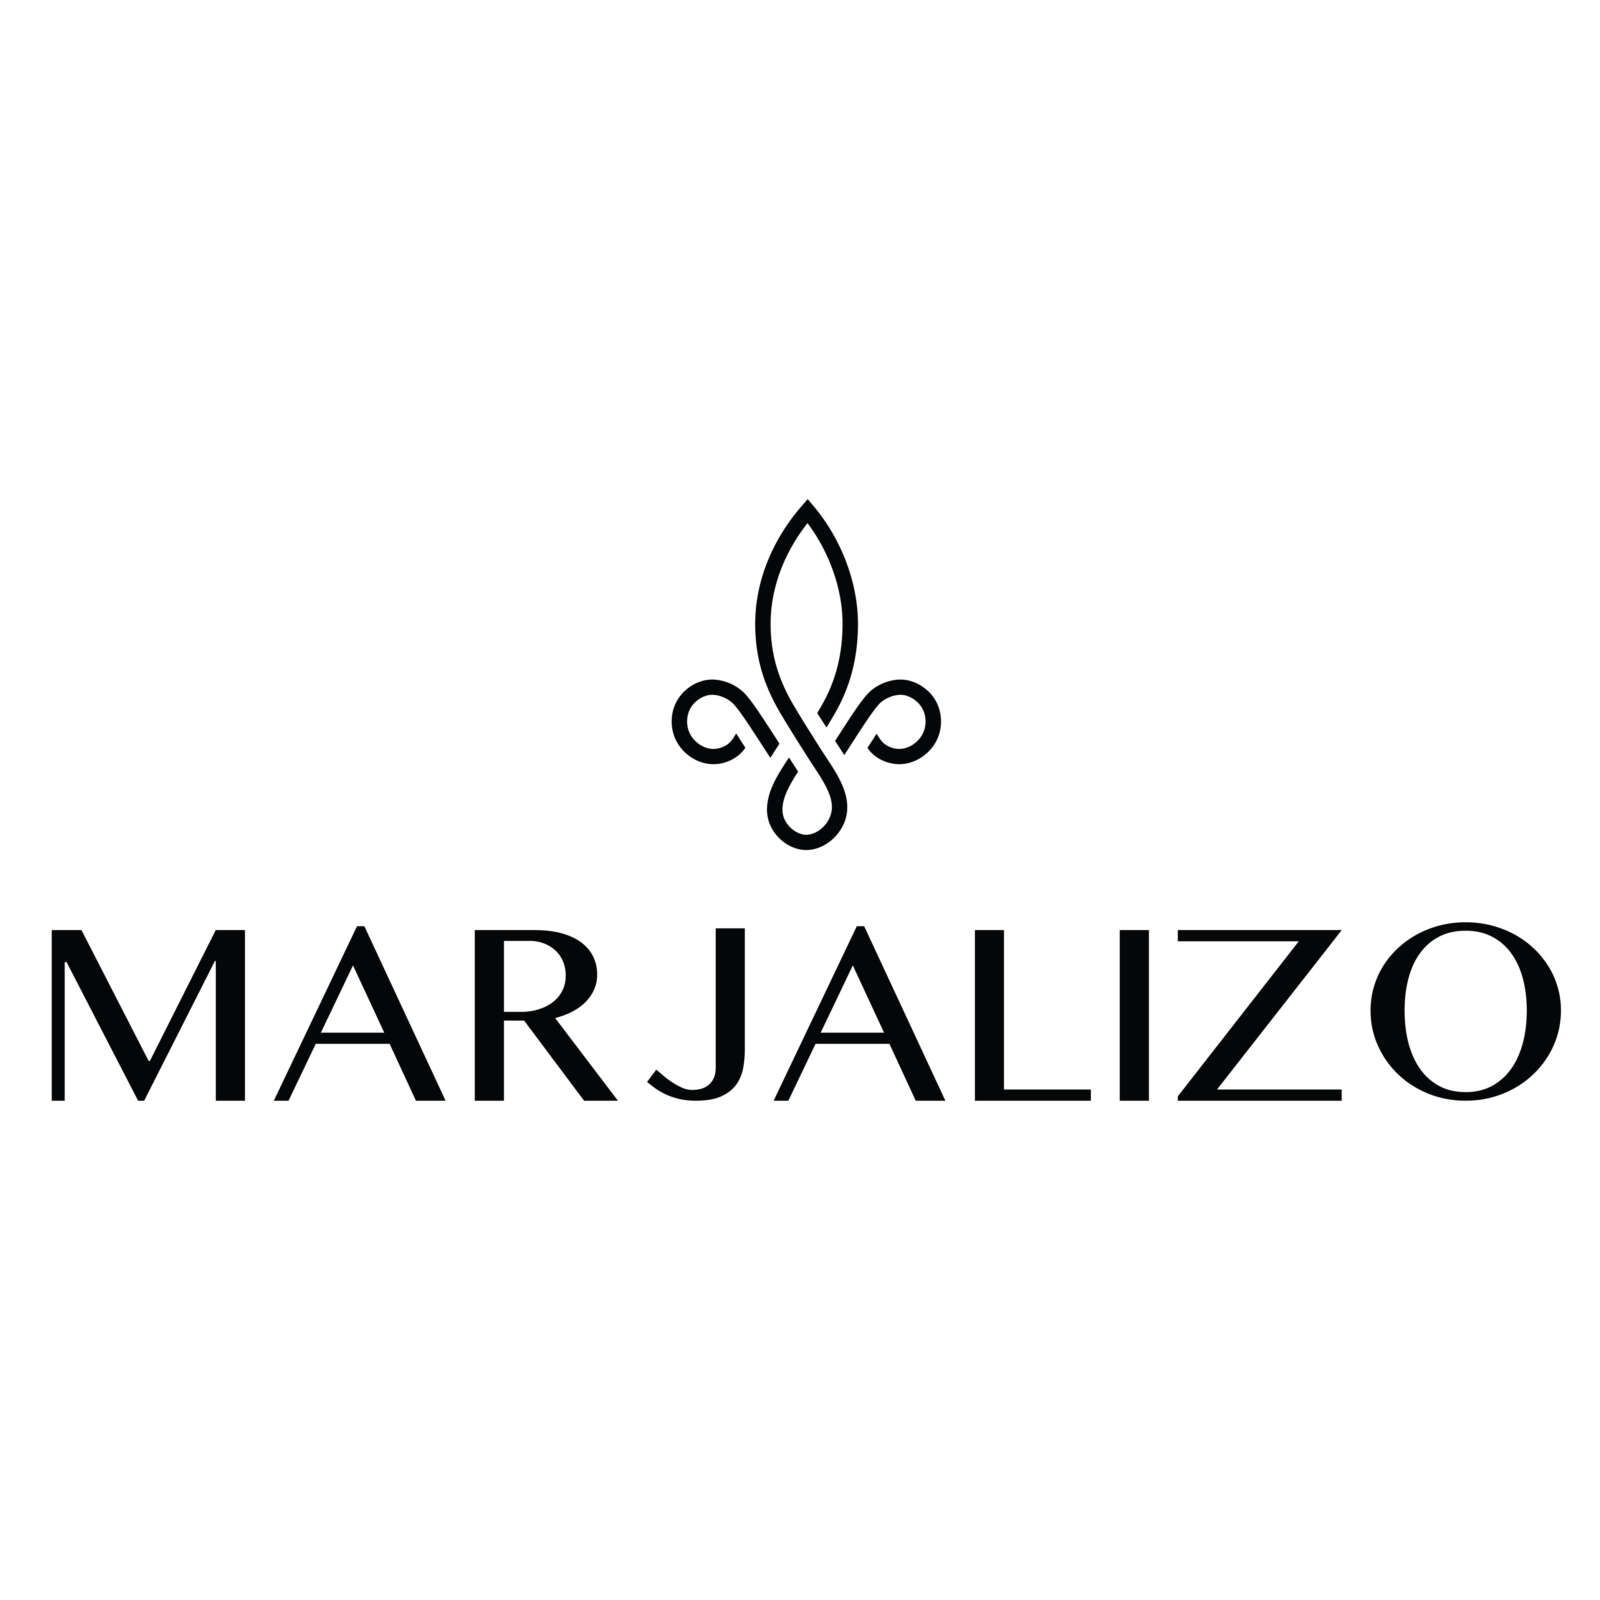 Marjalizo